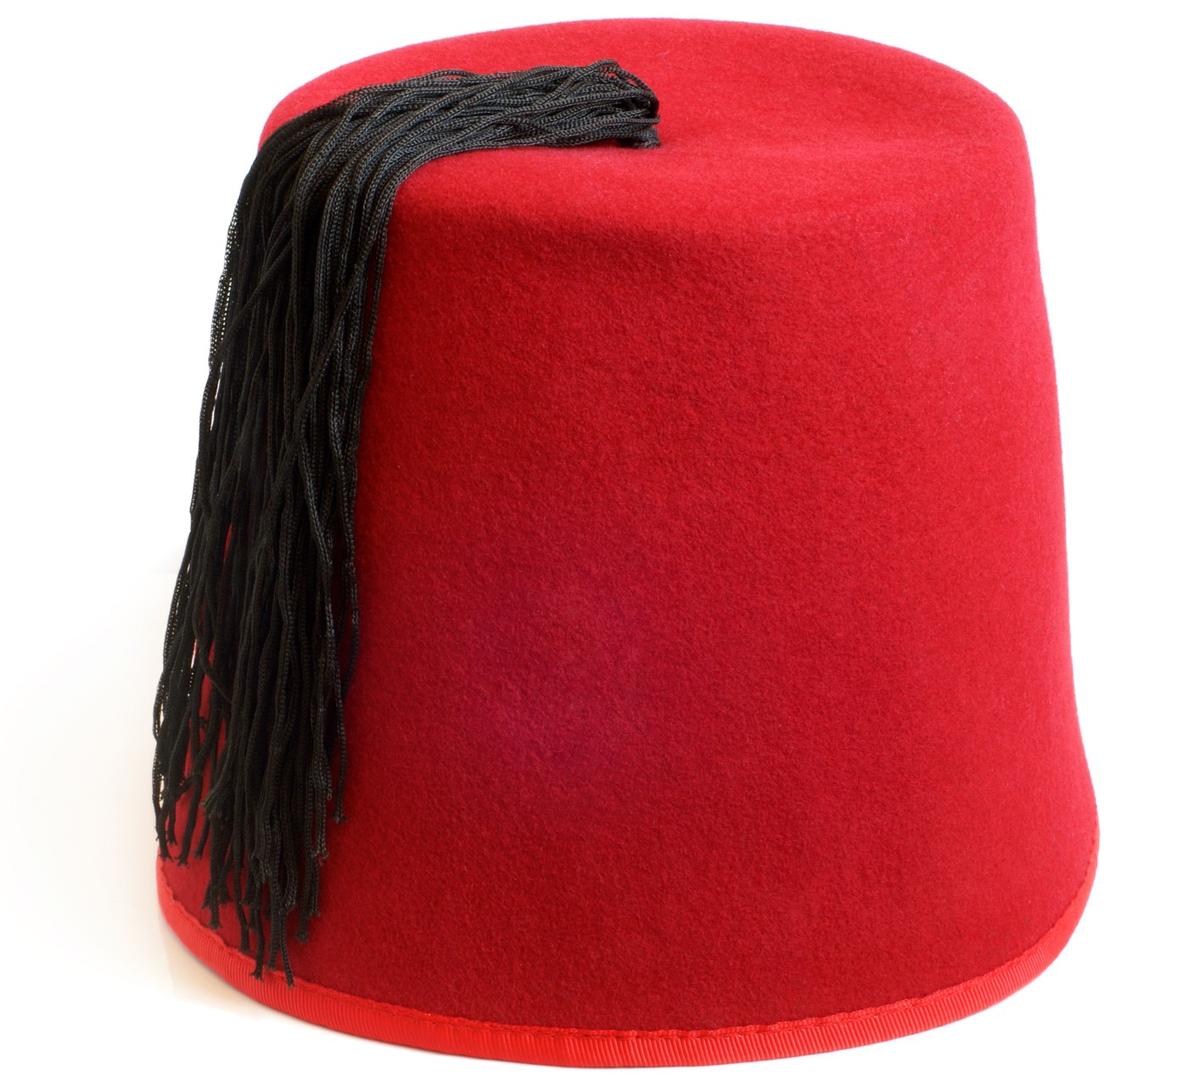 who wears a fez